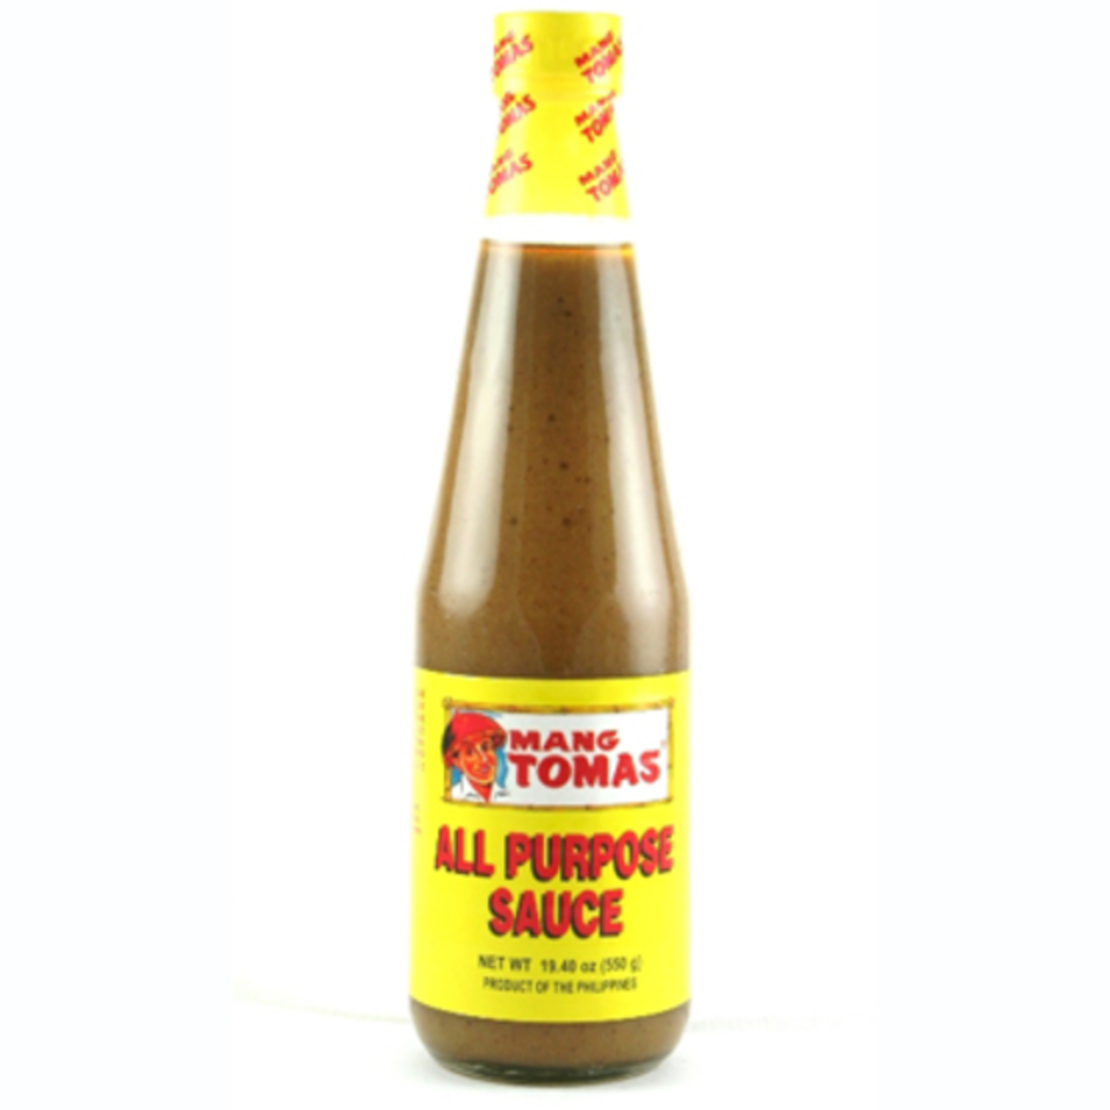 Mang Tomas - All Purpose Sauce 330g